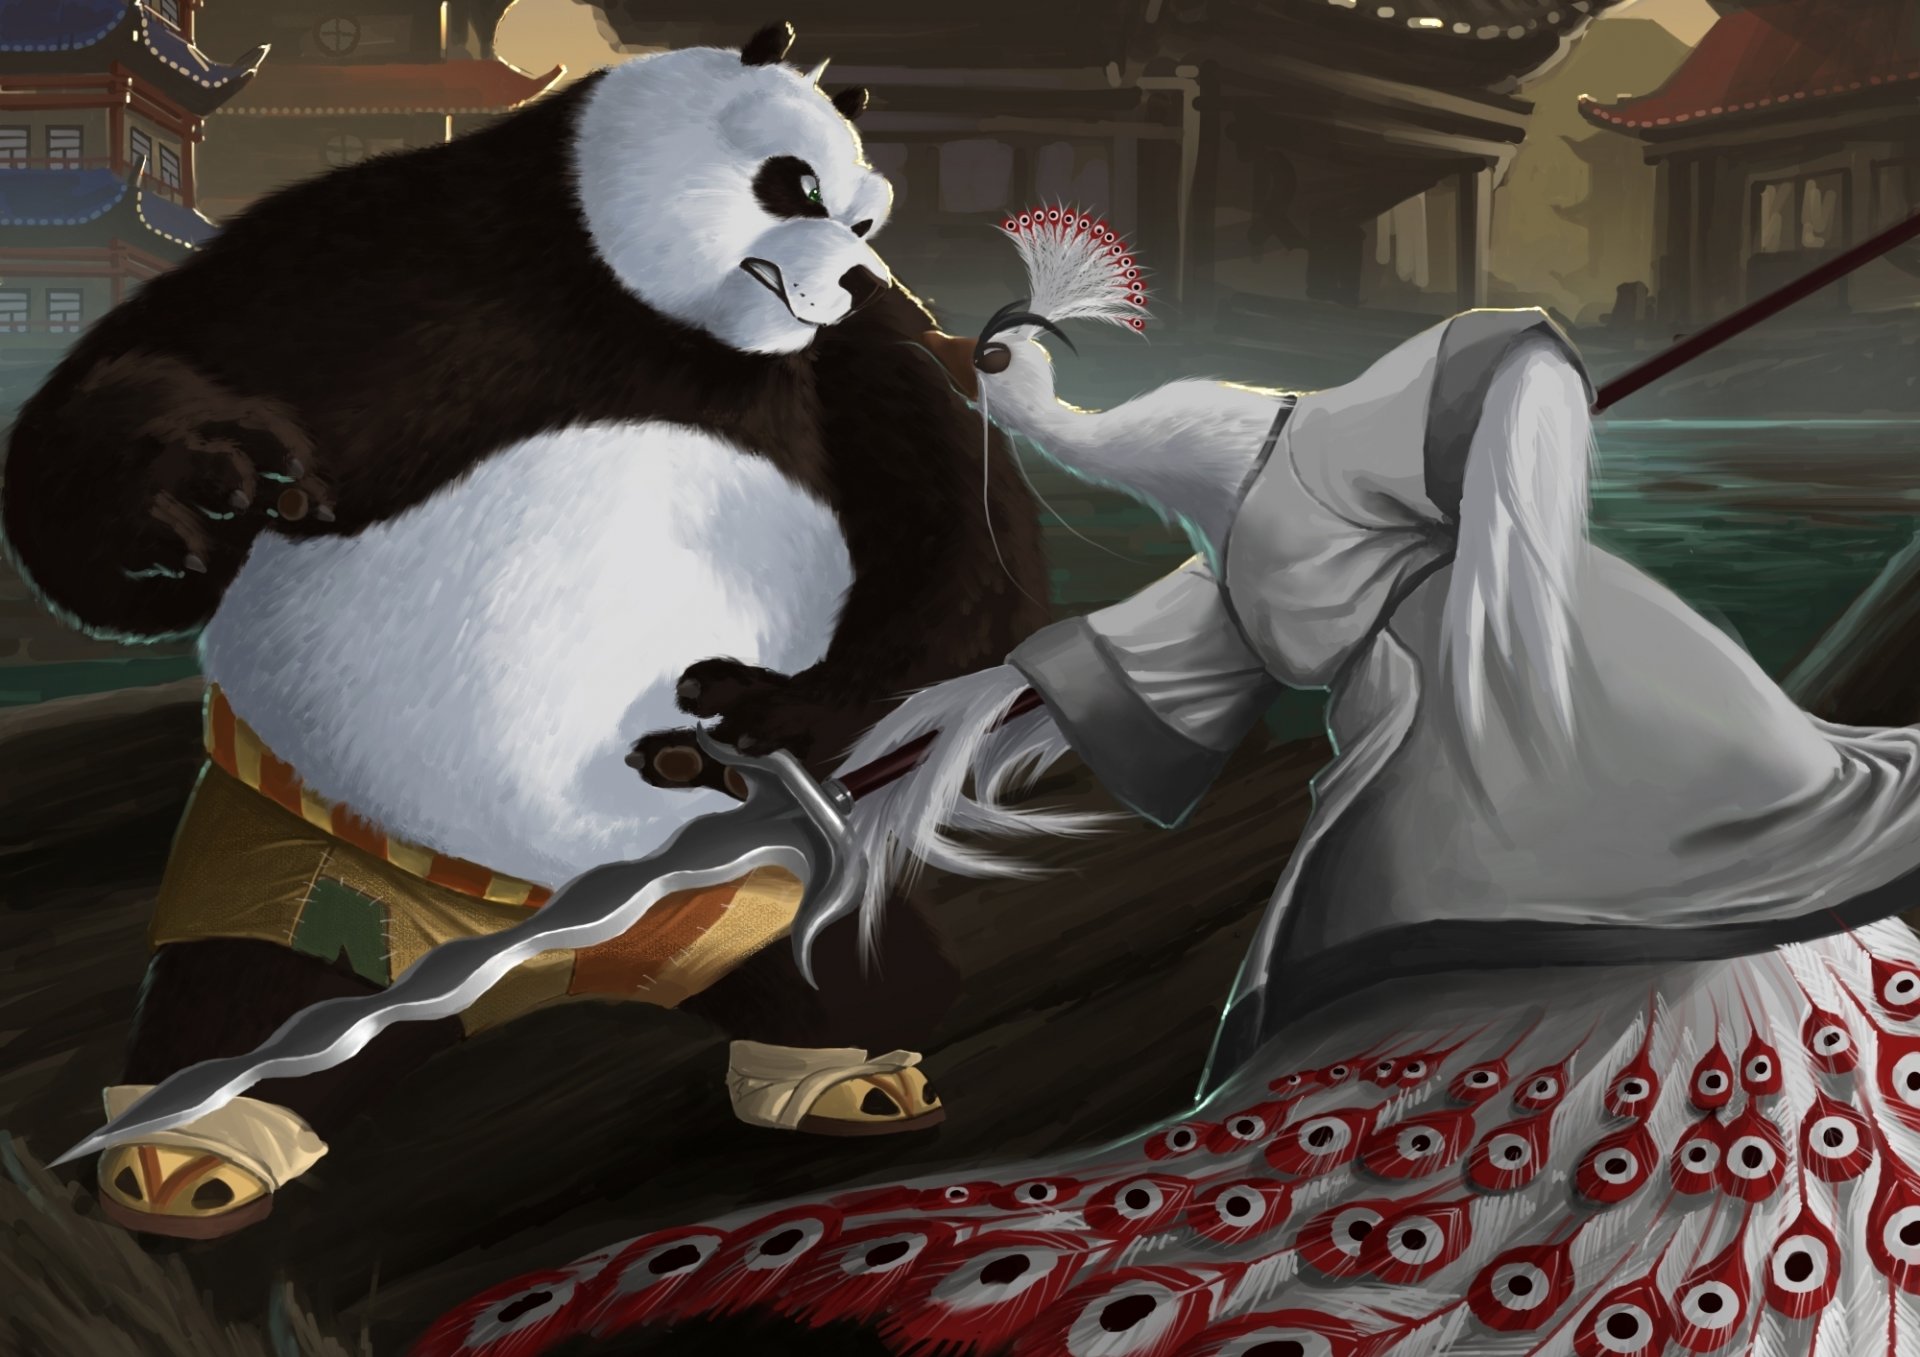 арт karuma9 кунг -фу панда ро господин шэнь панда павлин птица азия ярость копье оружие